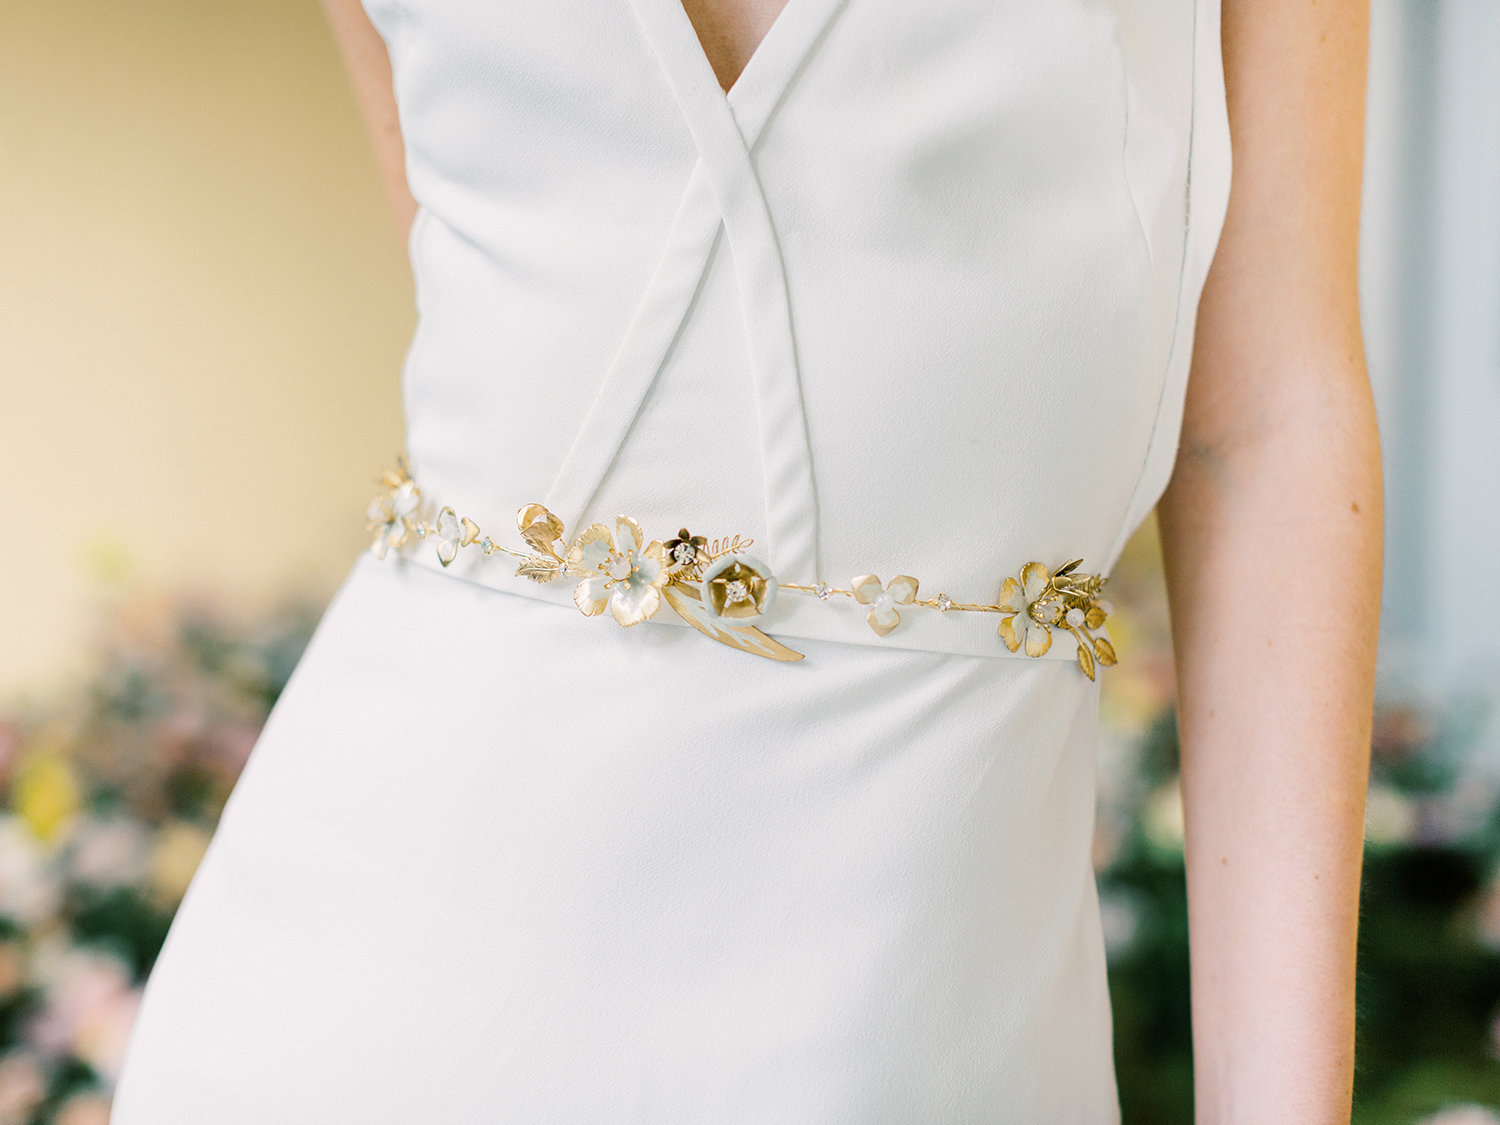 DIY Project - Bridal Belts & Sashes